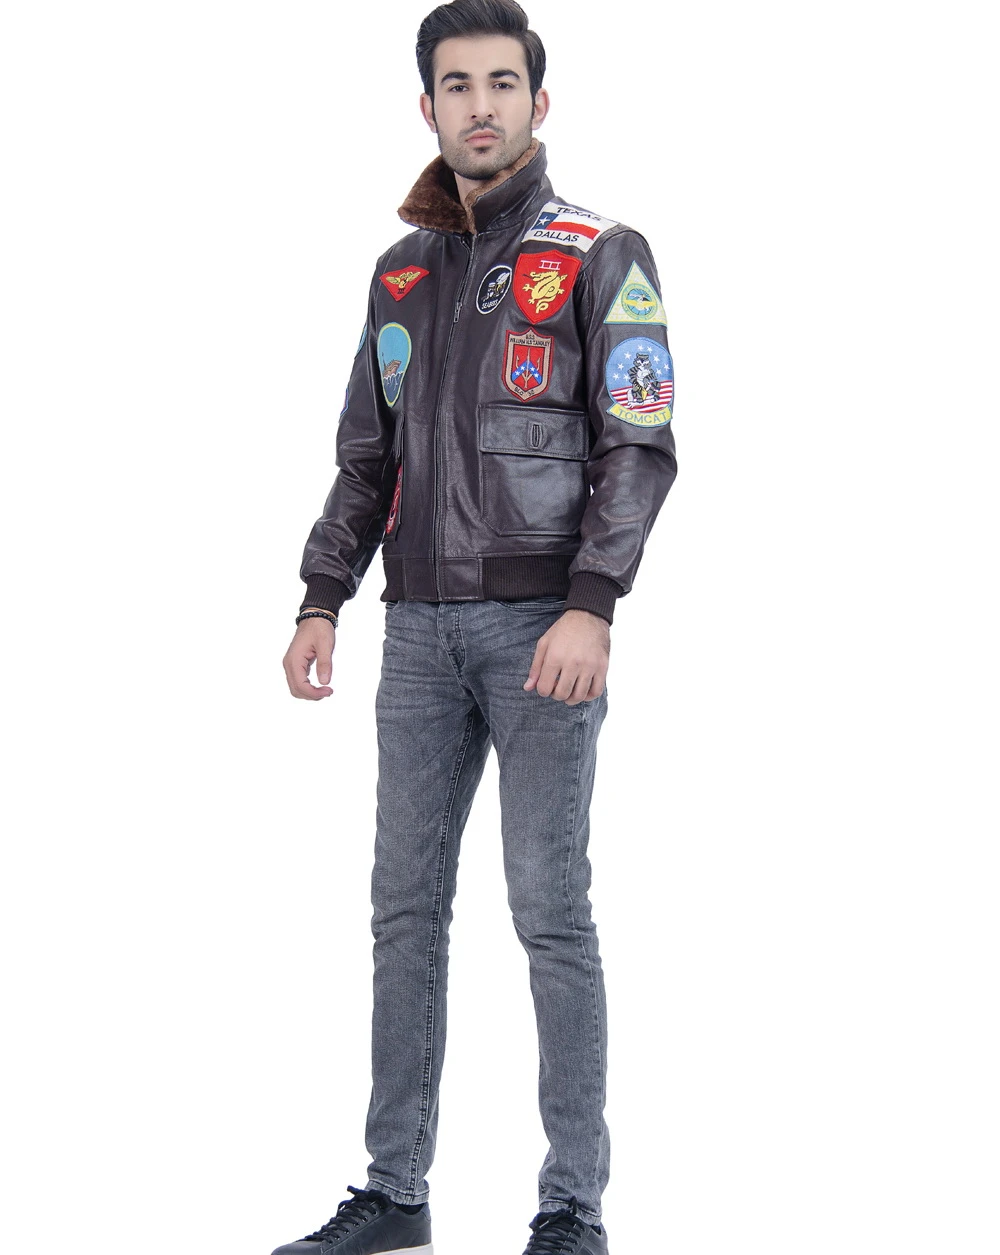 Top Gun G-1 Navy flight leather jacket as worn by Pete Maverick Mitchell in the Top Gun movie